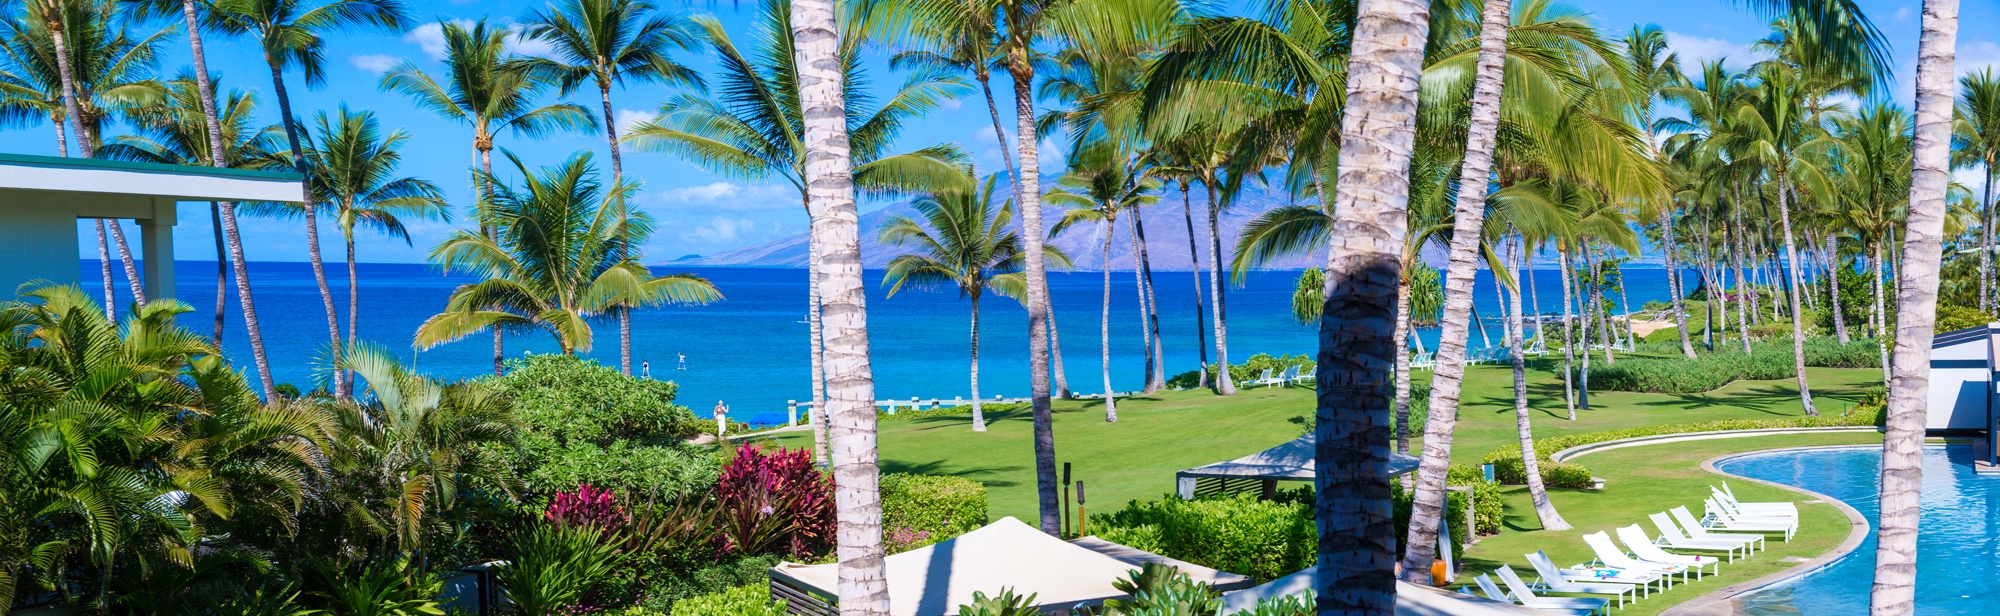 Wailea Vacation Rentals, SeaSpirit 811 at Andaz Maui Wailea Resort* - Spectacular Views From Your Own Private Lanai